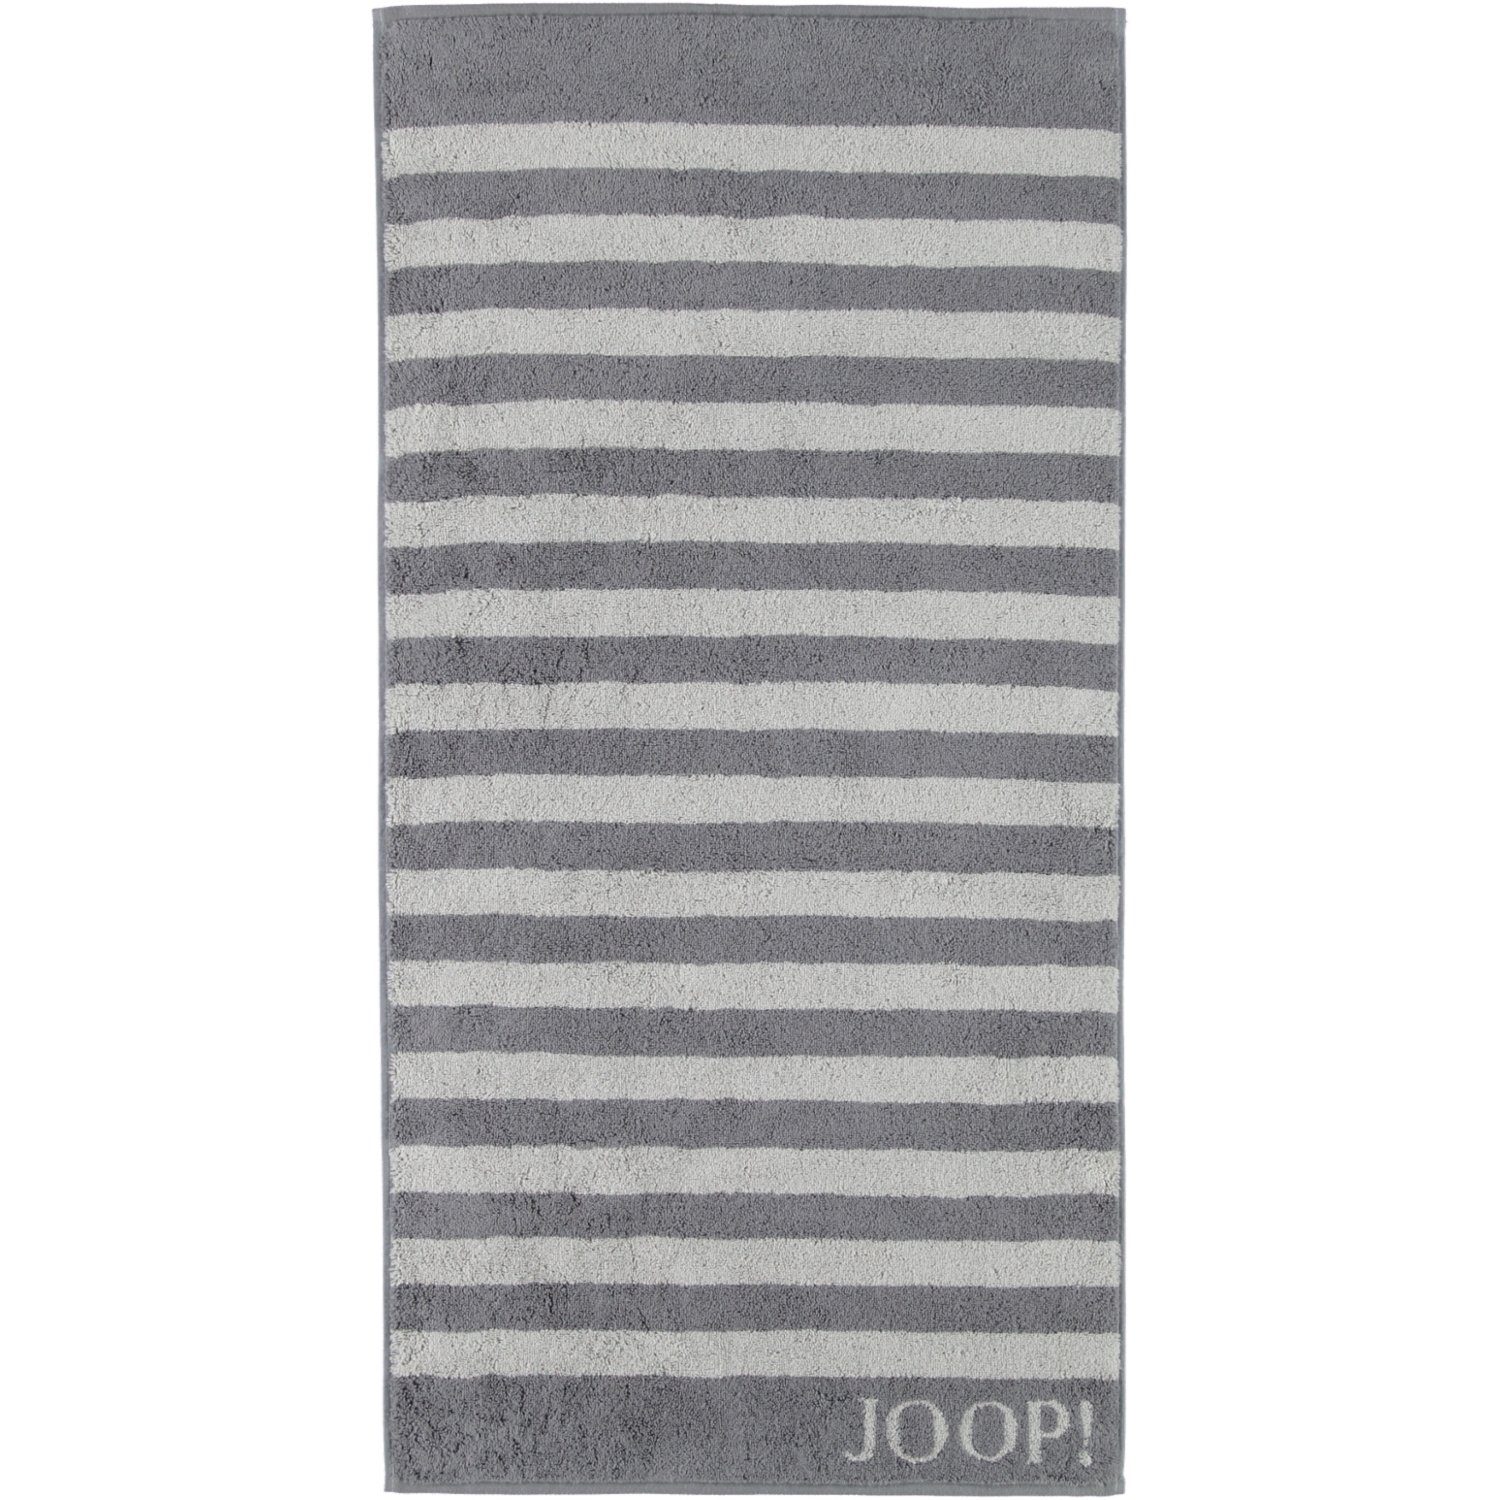 Joop! Handtücher Classic Stripes 1610, 100% Baumwolle anthrazit